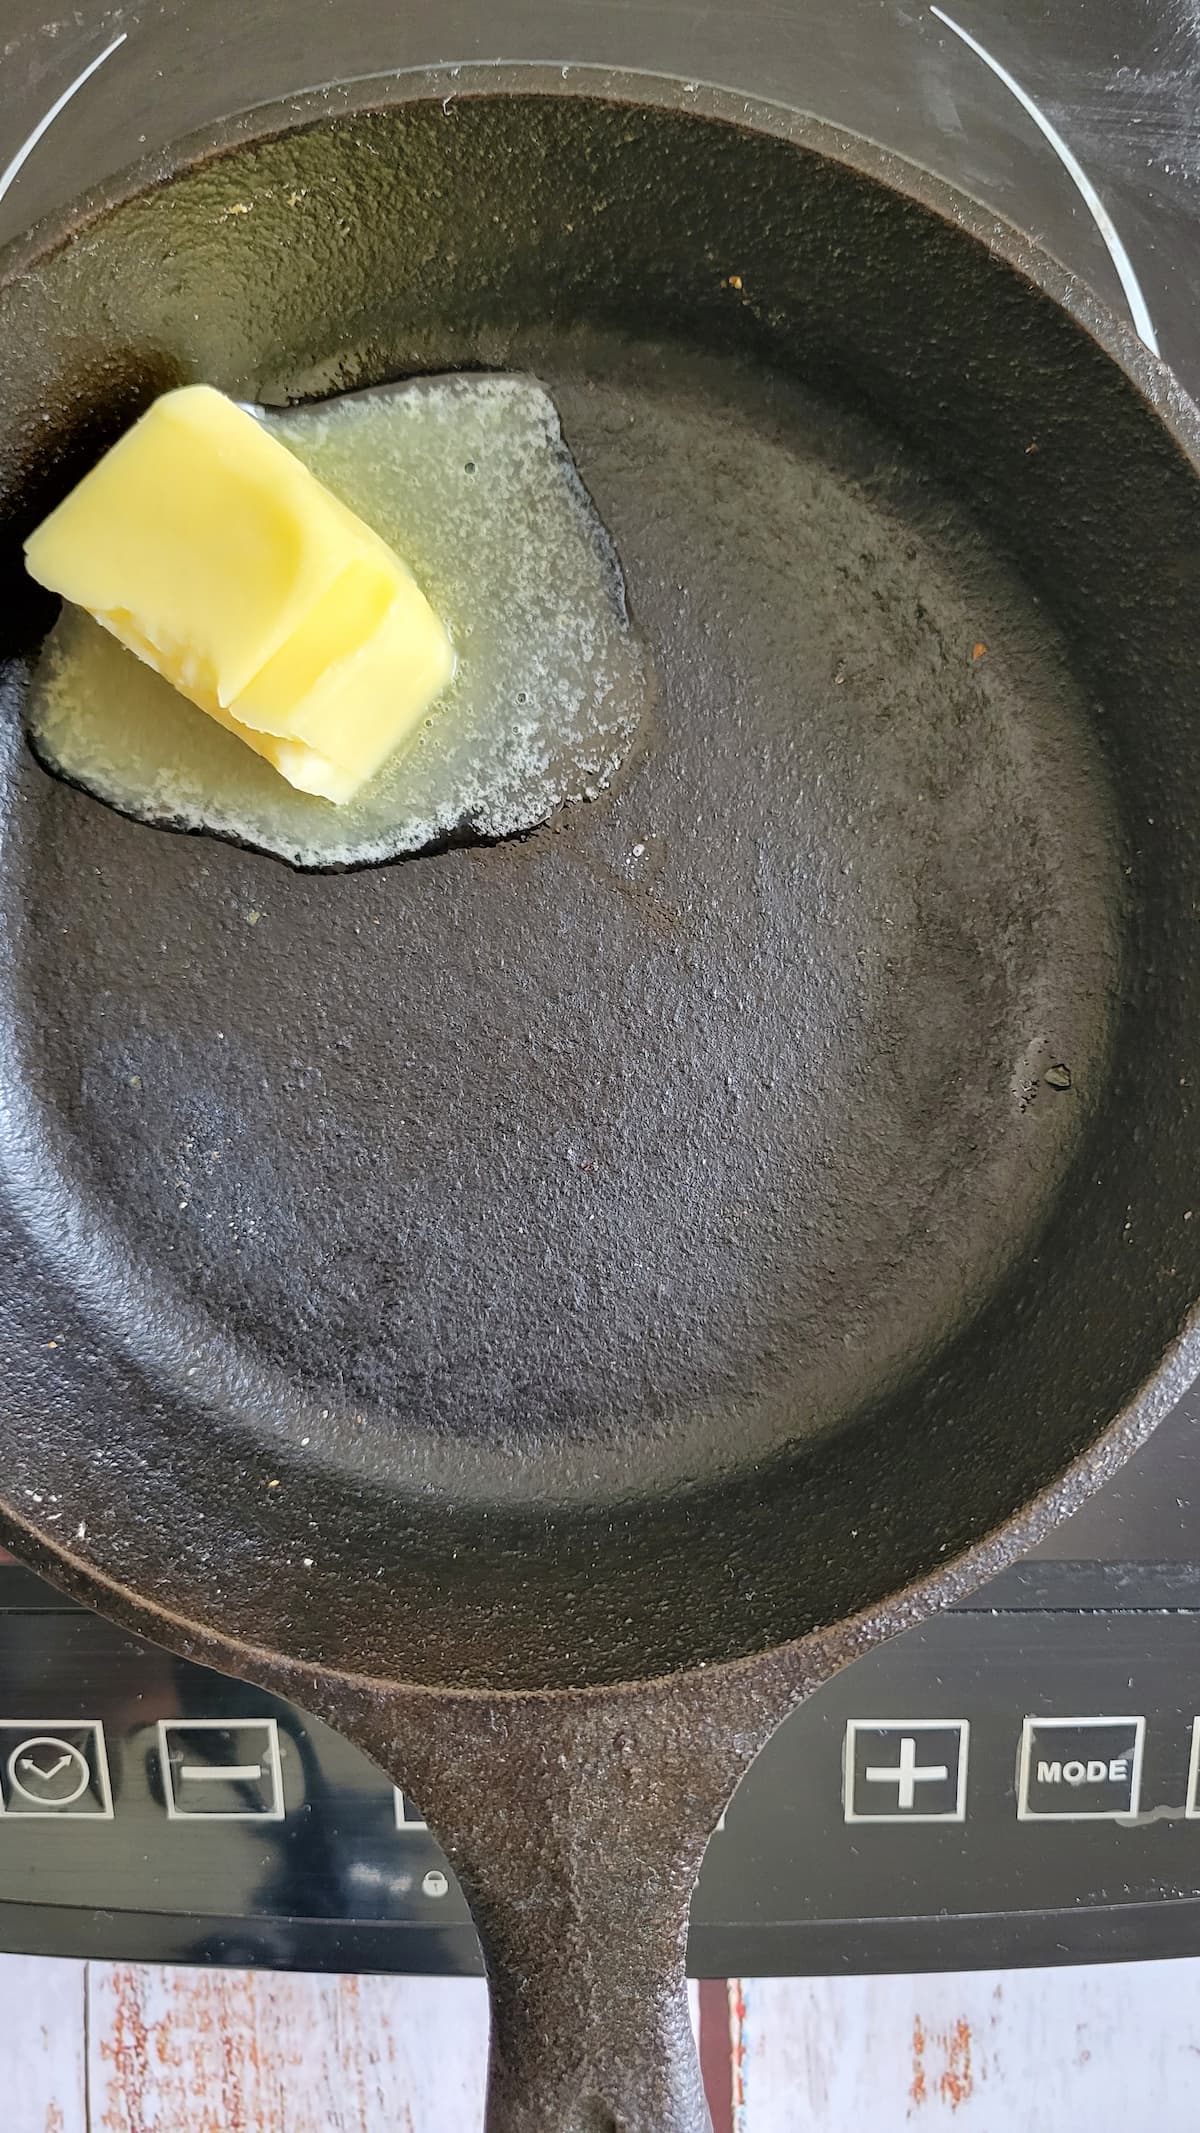 butter melting in a cast iron skillet on a burner